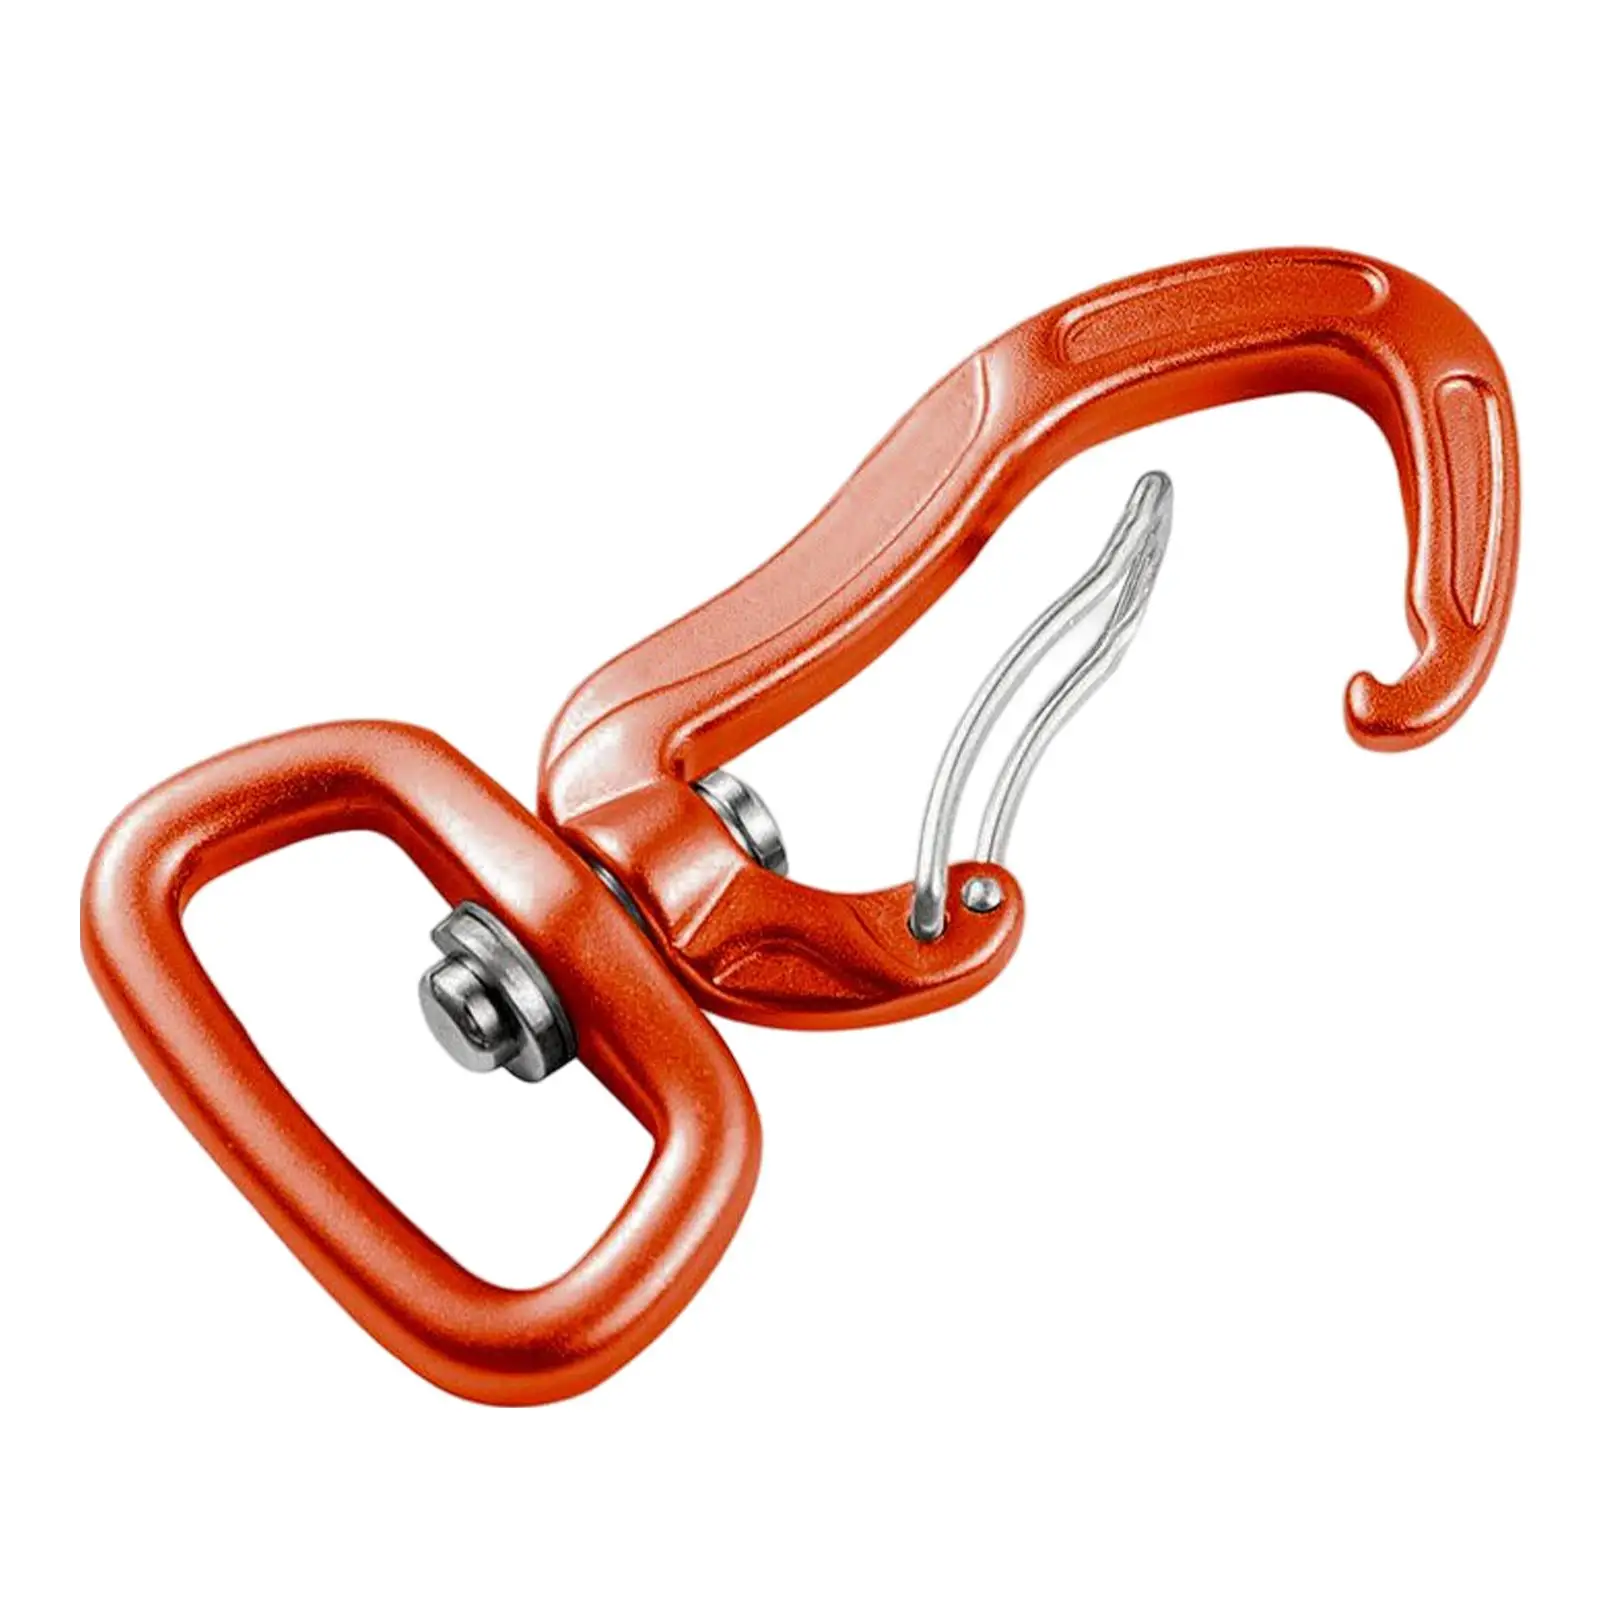 360° Swivel Carabiner with Swivel Ring, Locking Carabiner for Dog Leash,